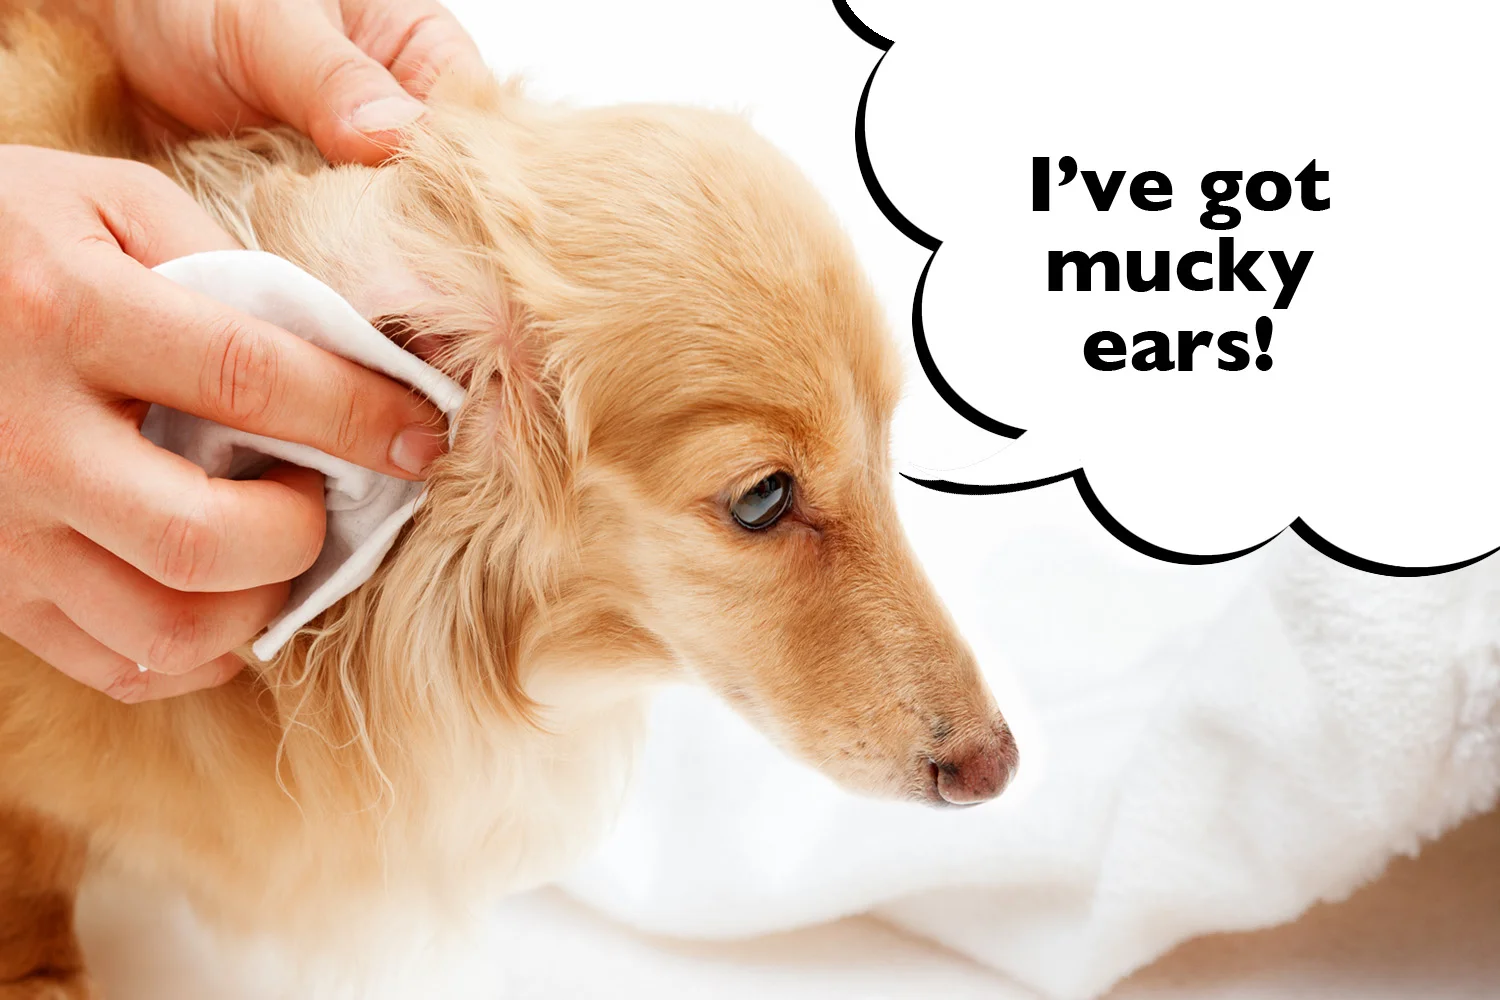 How to Clean Dachshund Ears